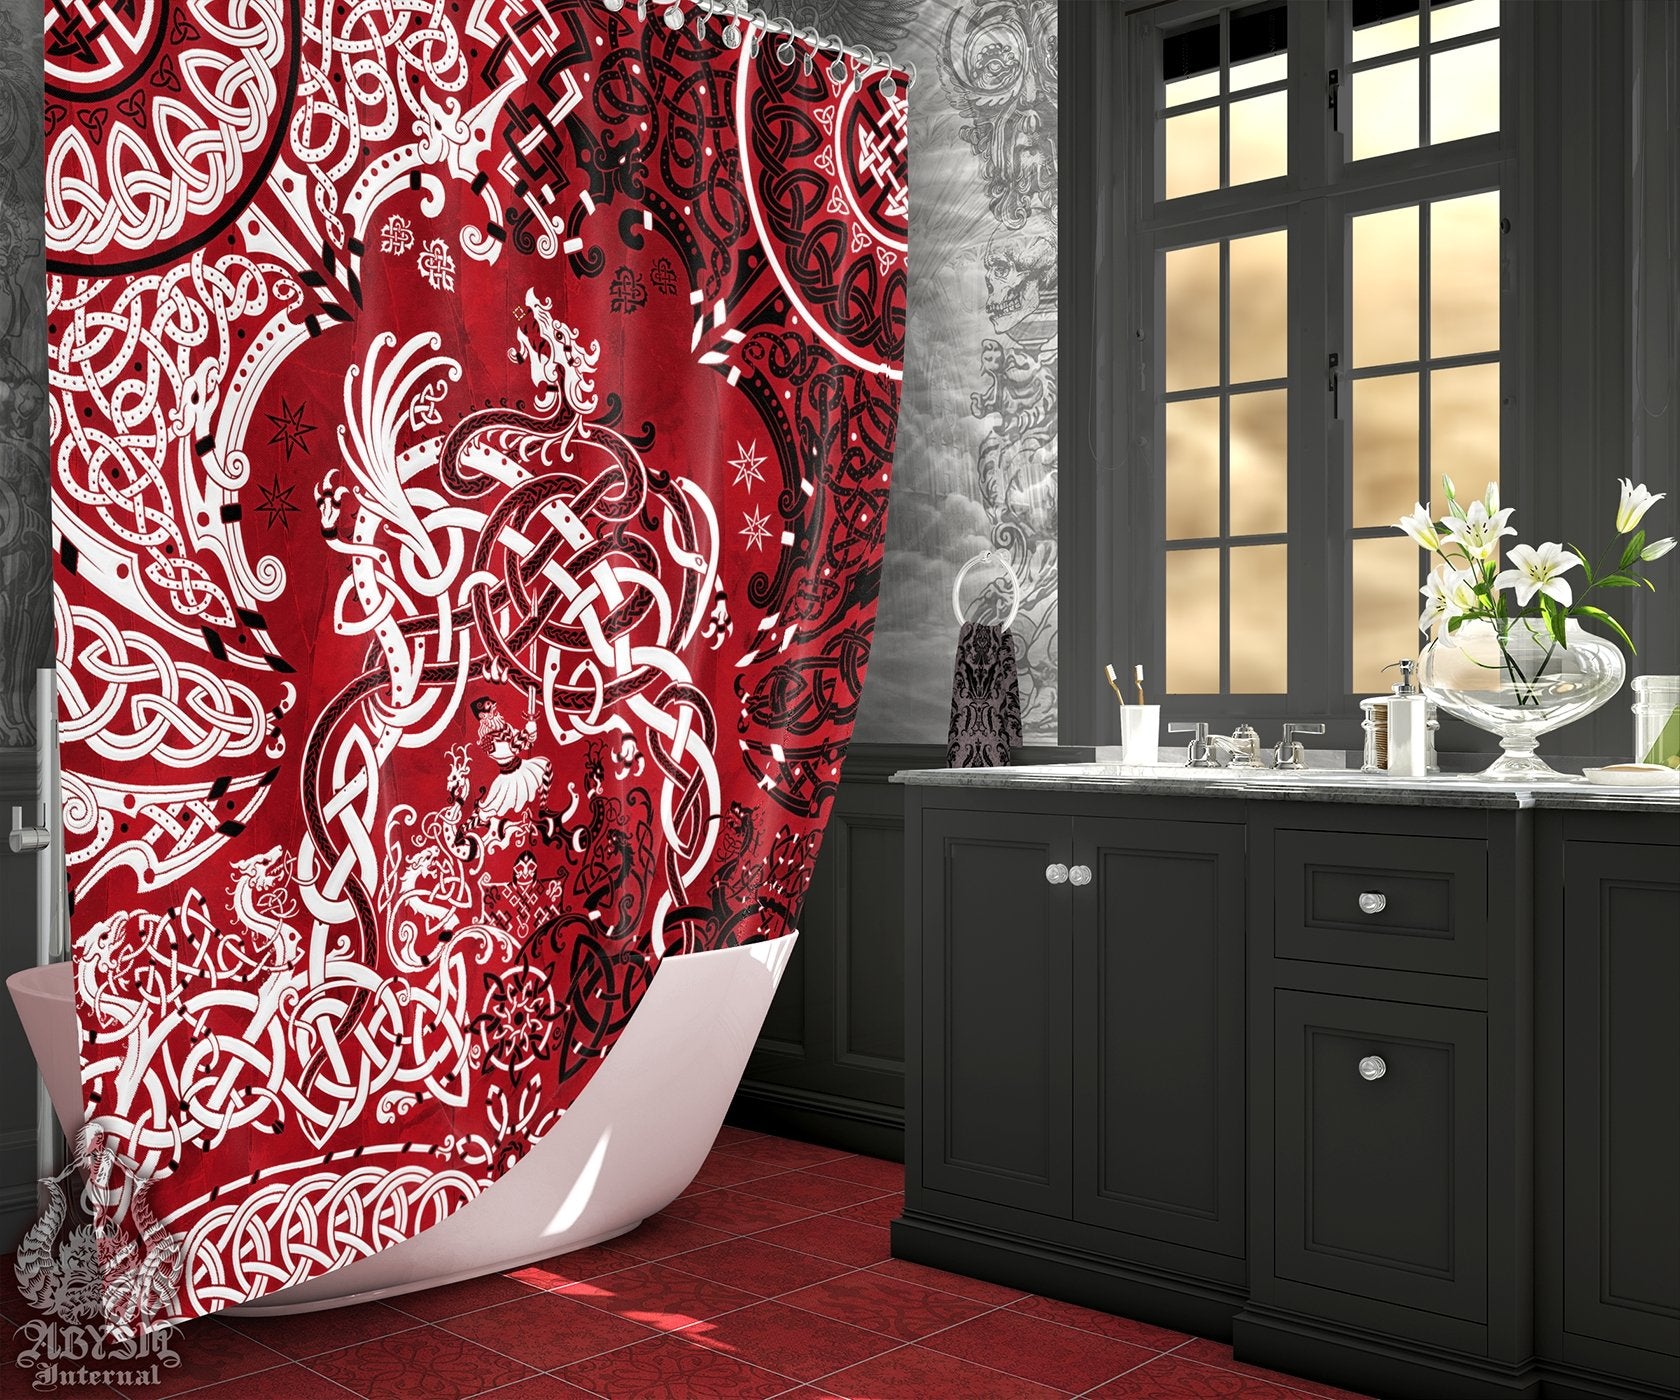 Viking Shower Curtain, Bathroom Decor, Nordic & Norse Art, Dragon Fafnir - Bloody Red - Abysm Internal